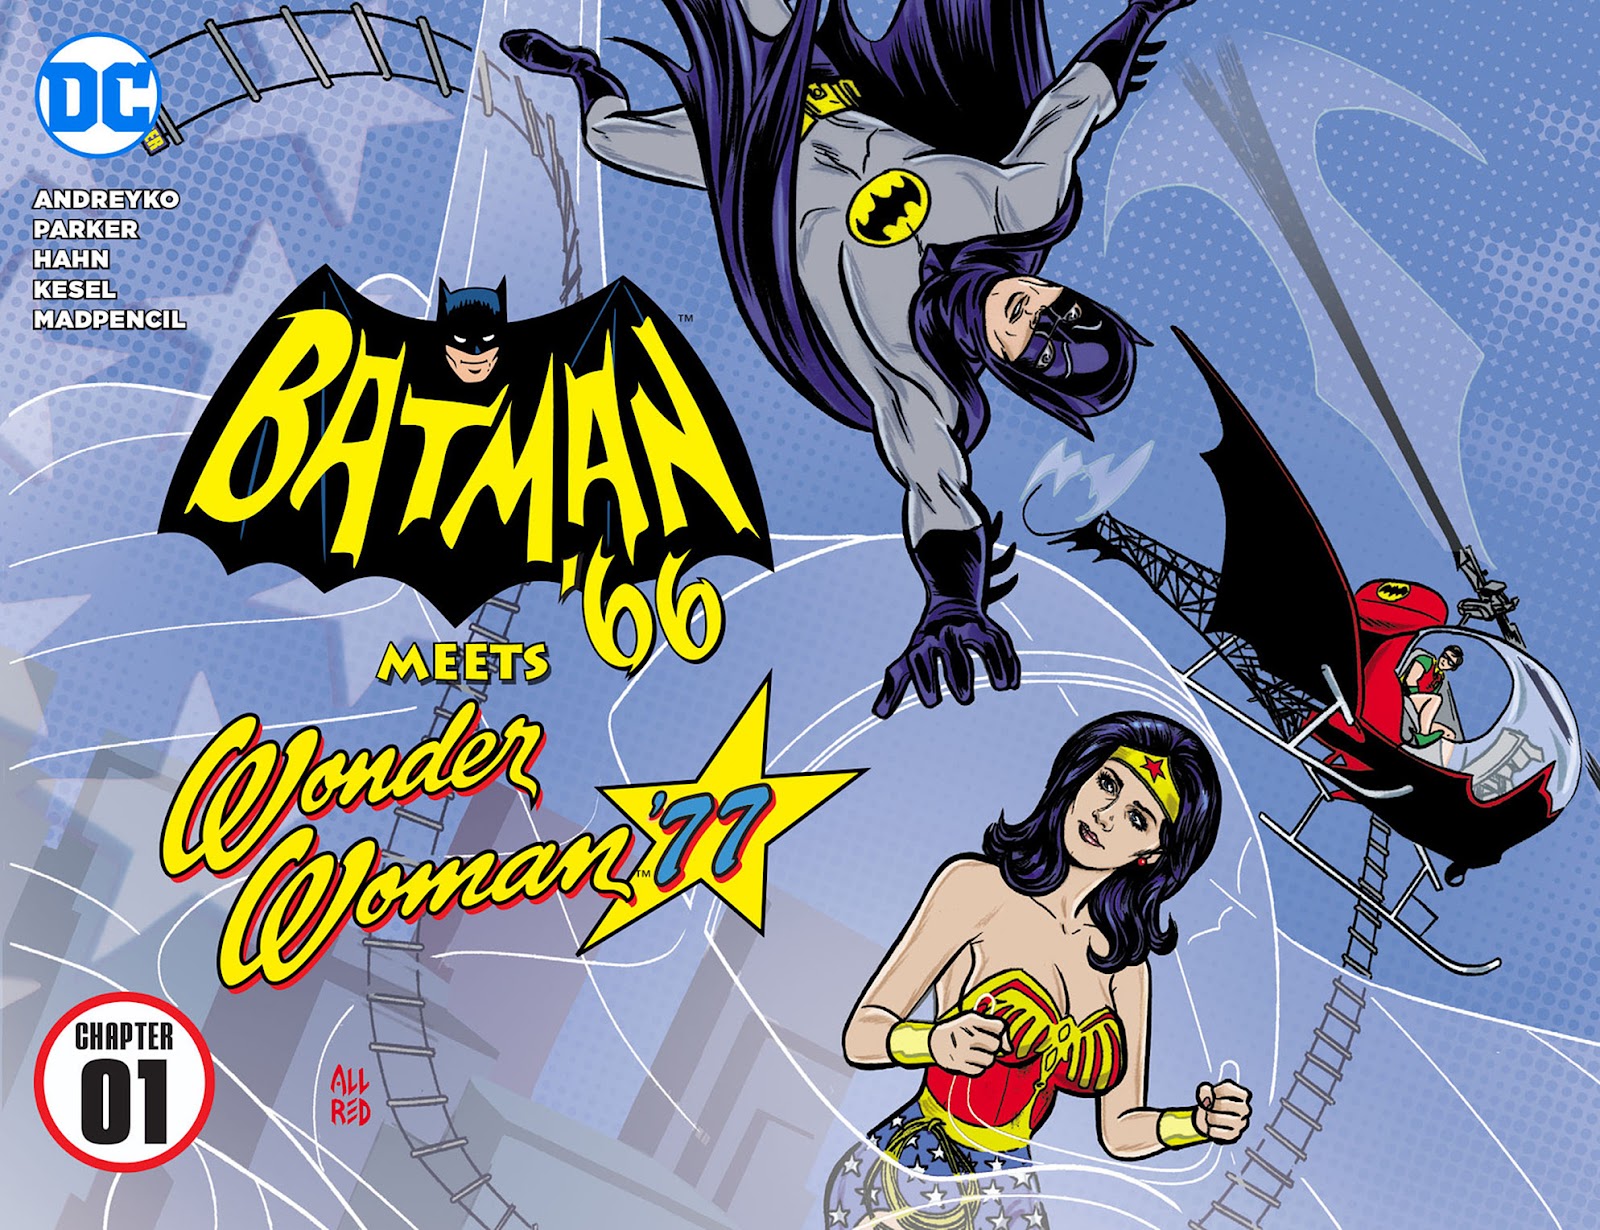 Batman '66 Meets Wonder Woman '77 issue 1 - Page 1